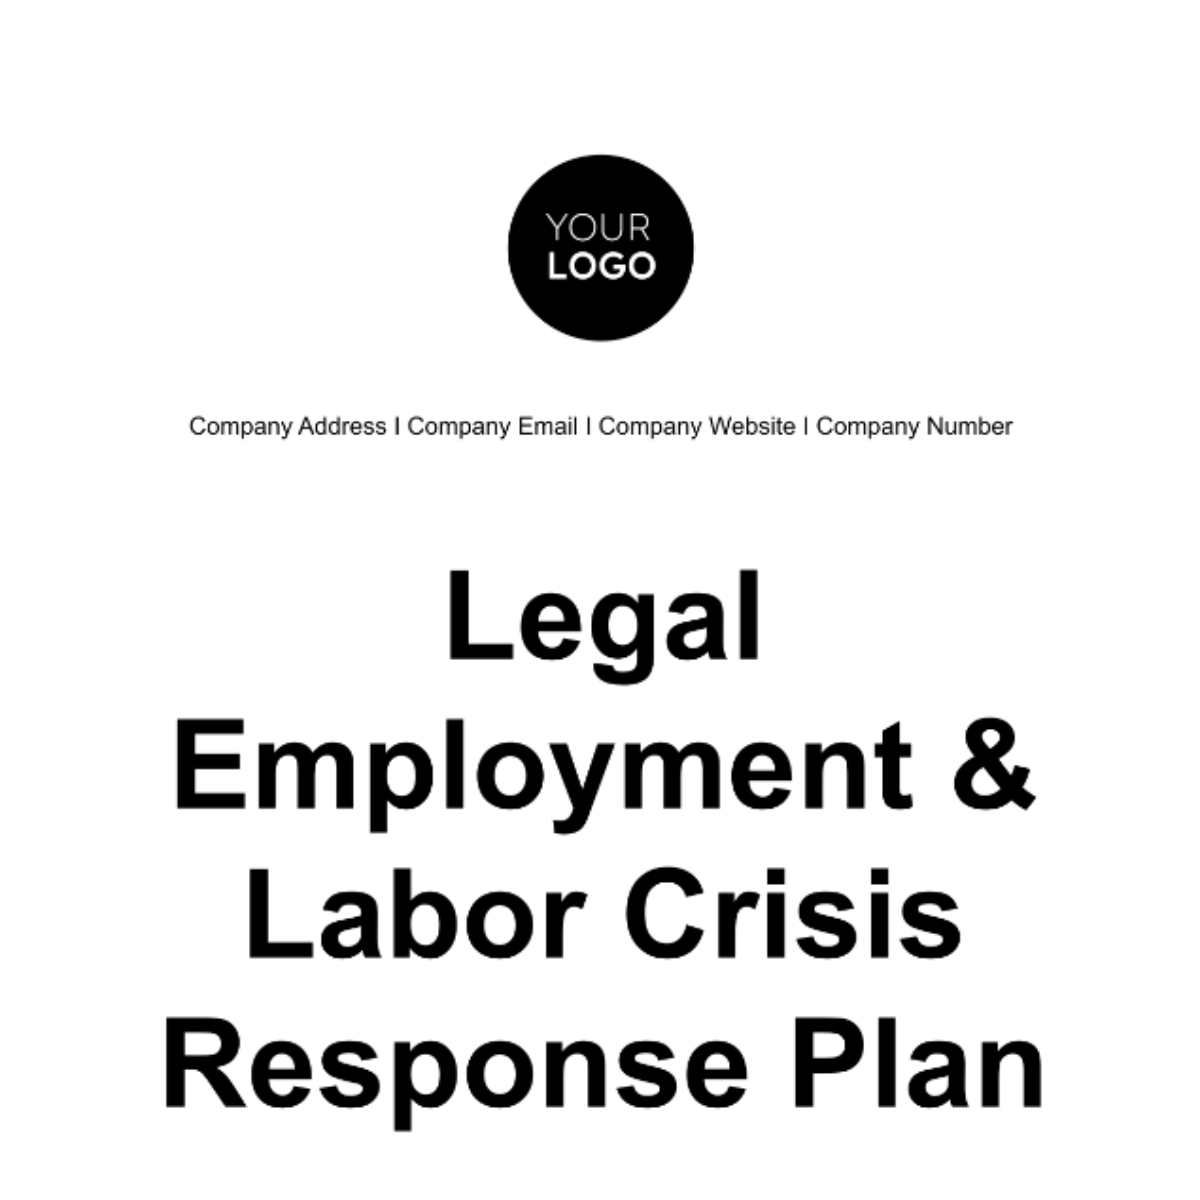 Legal Employment & Labor Crisis Response Plan Template